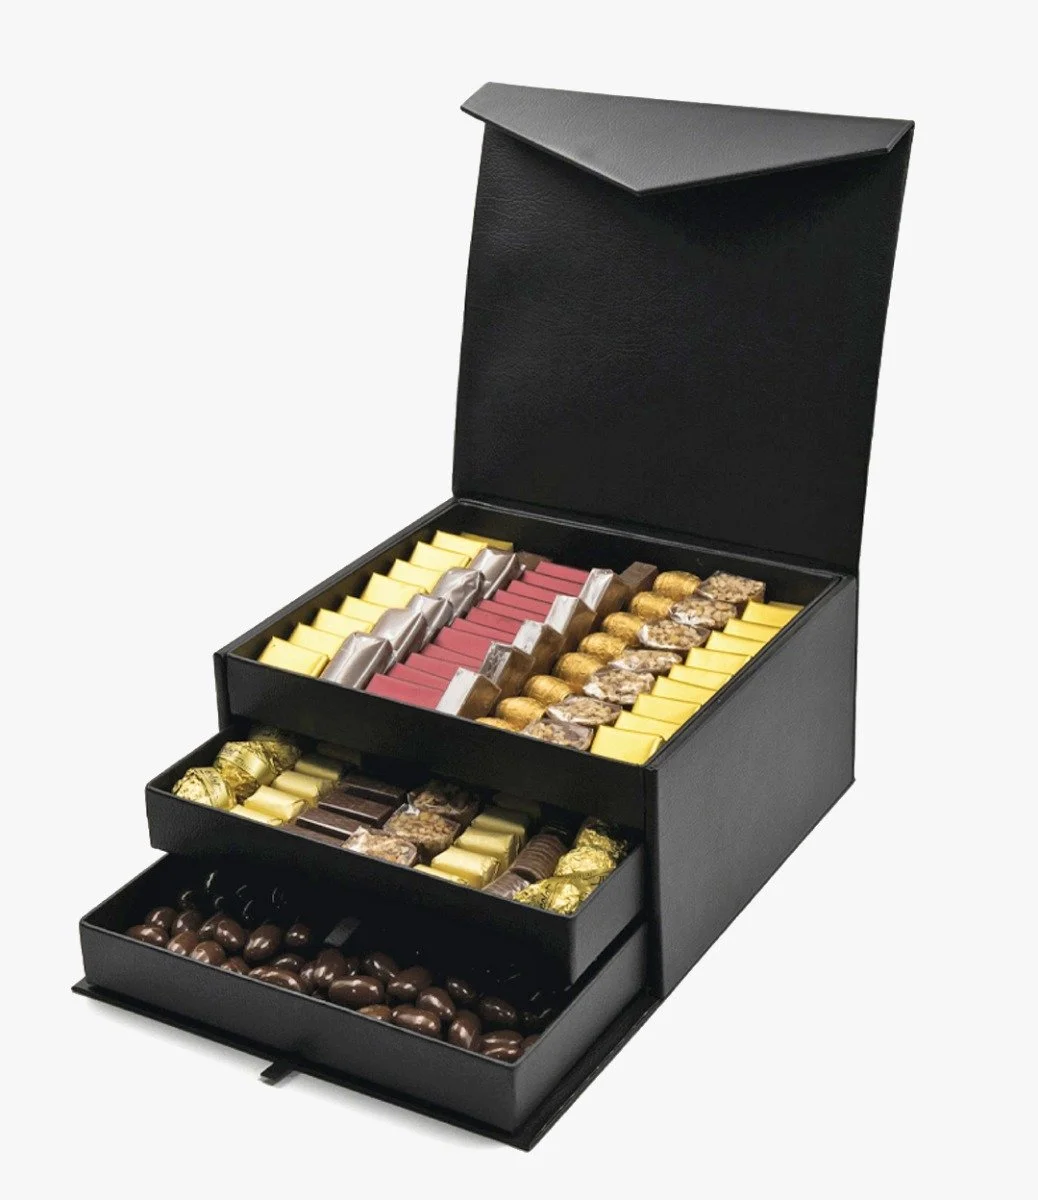 Multi Layer Chocolate Box by Eclat 